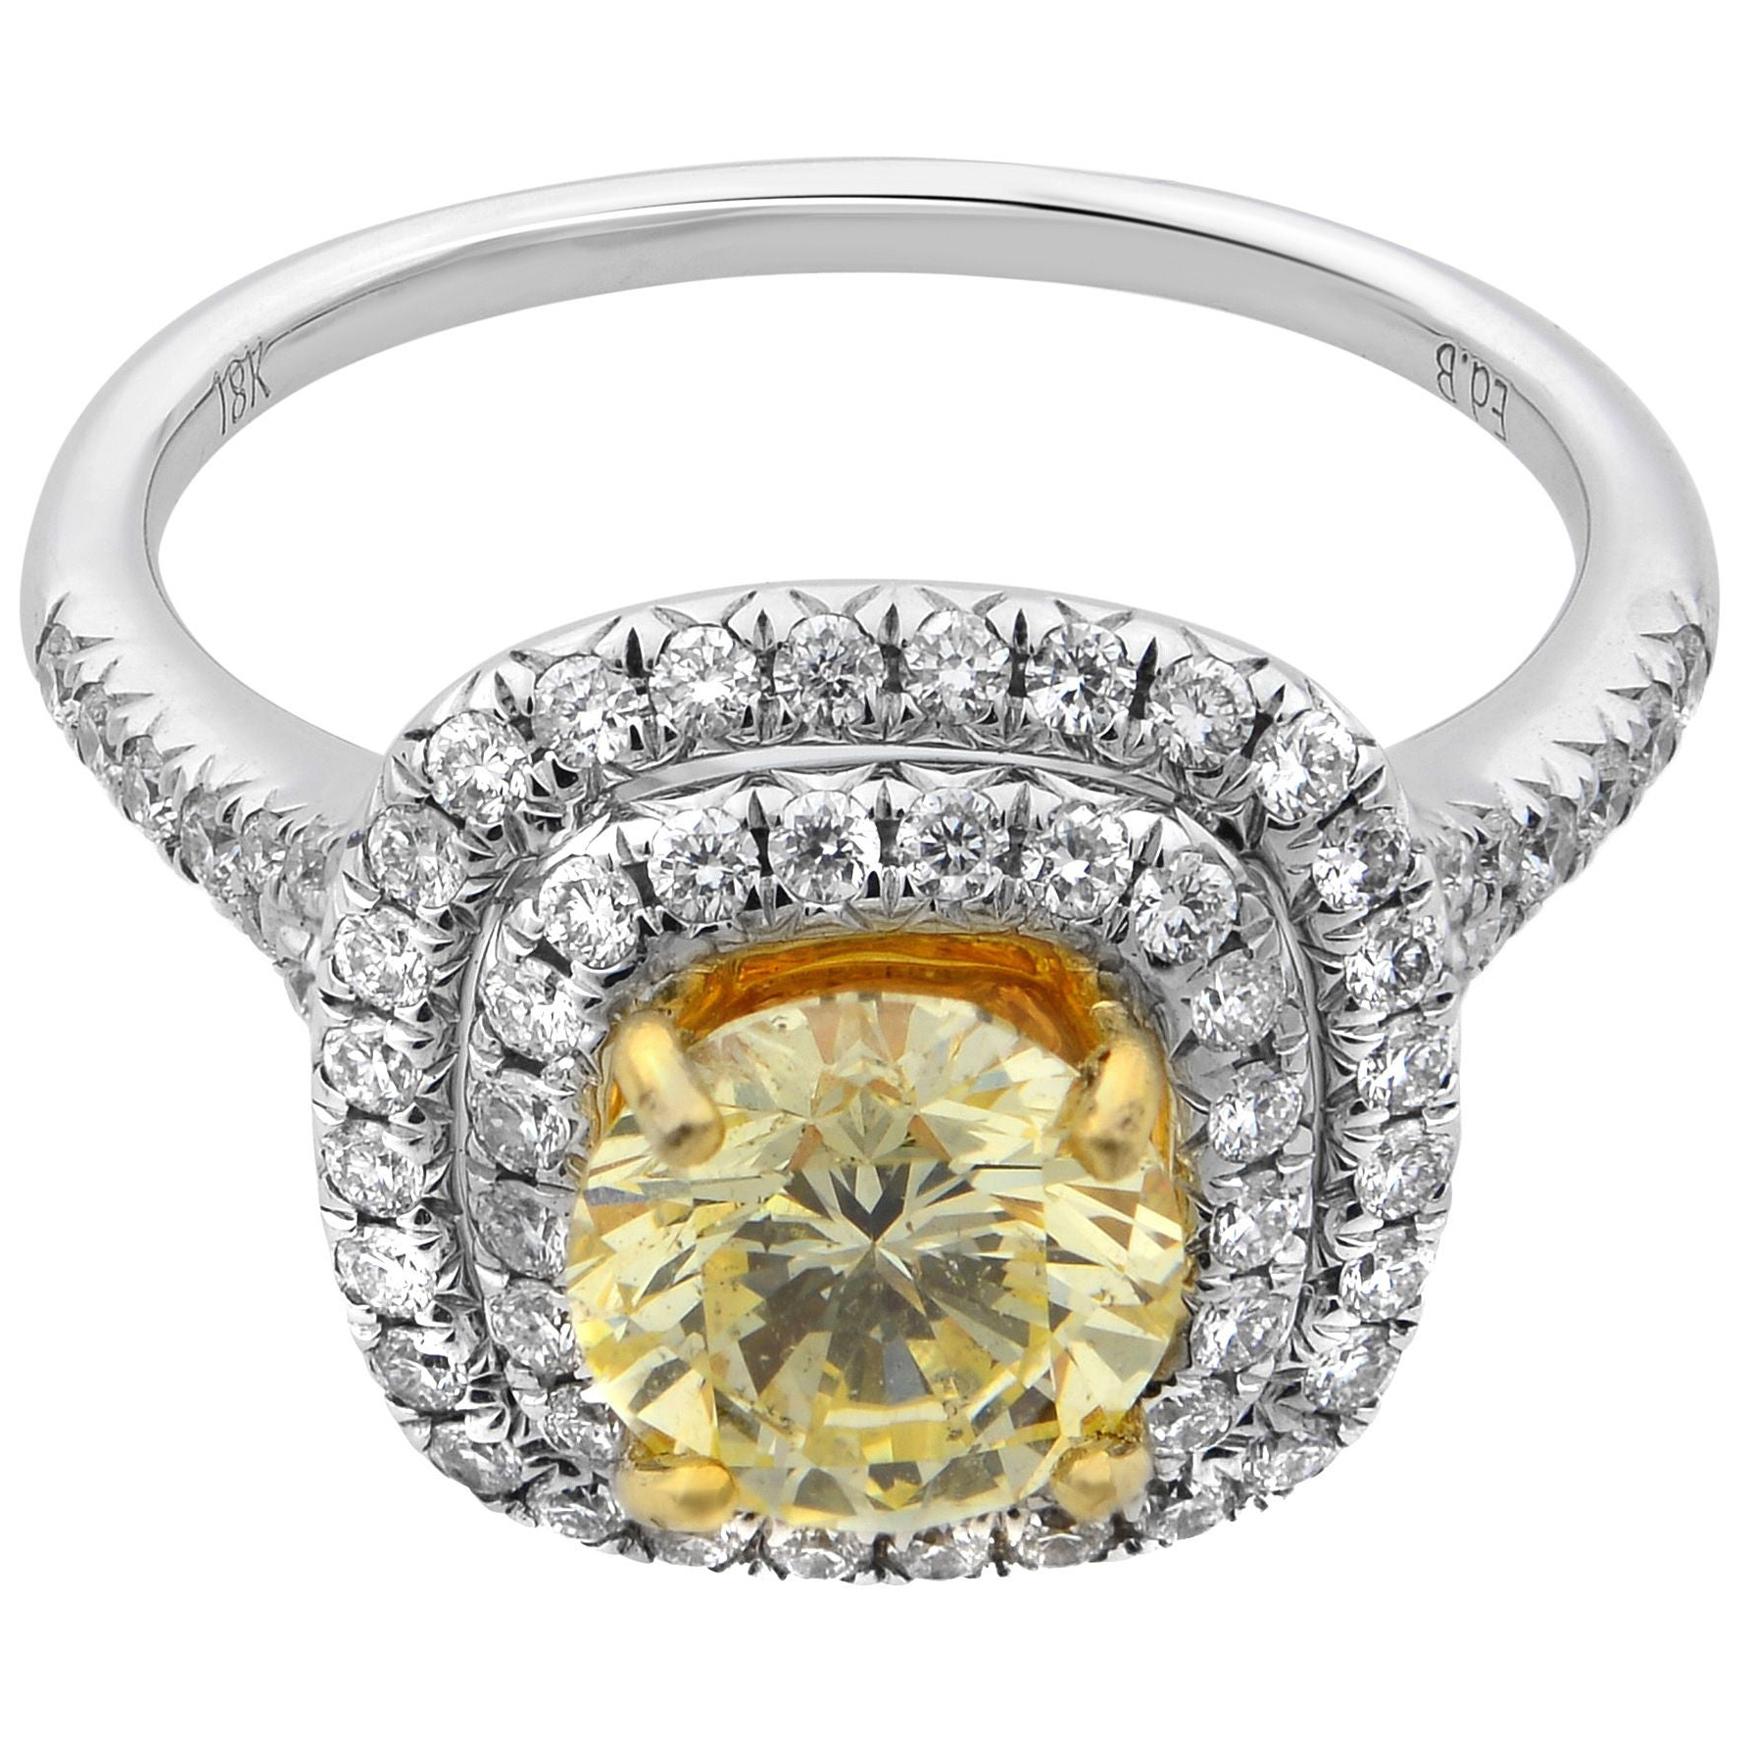 Rachel Koen 18 Karat White Gold Round Cut Fancy Yellow Diamond Ring 1.13 Carat For Sale